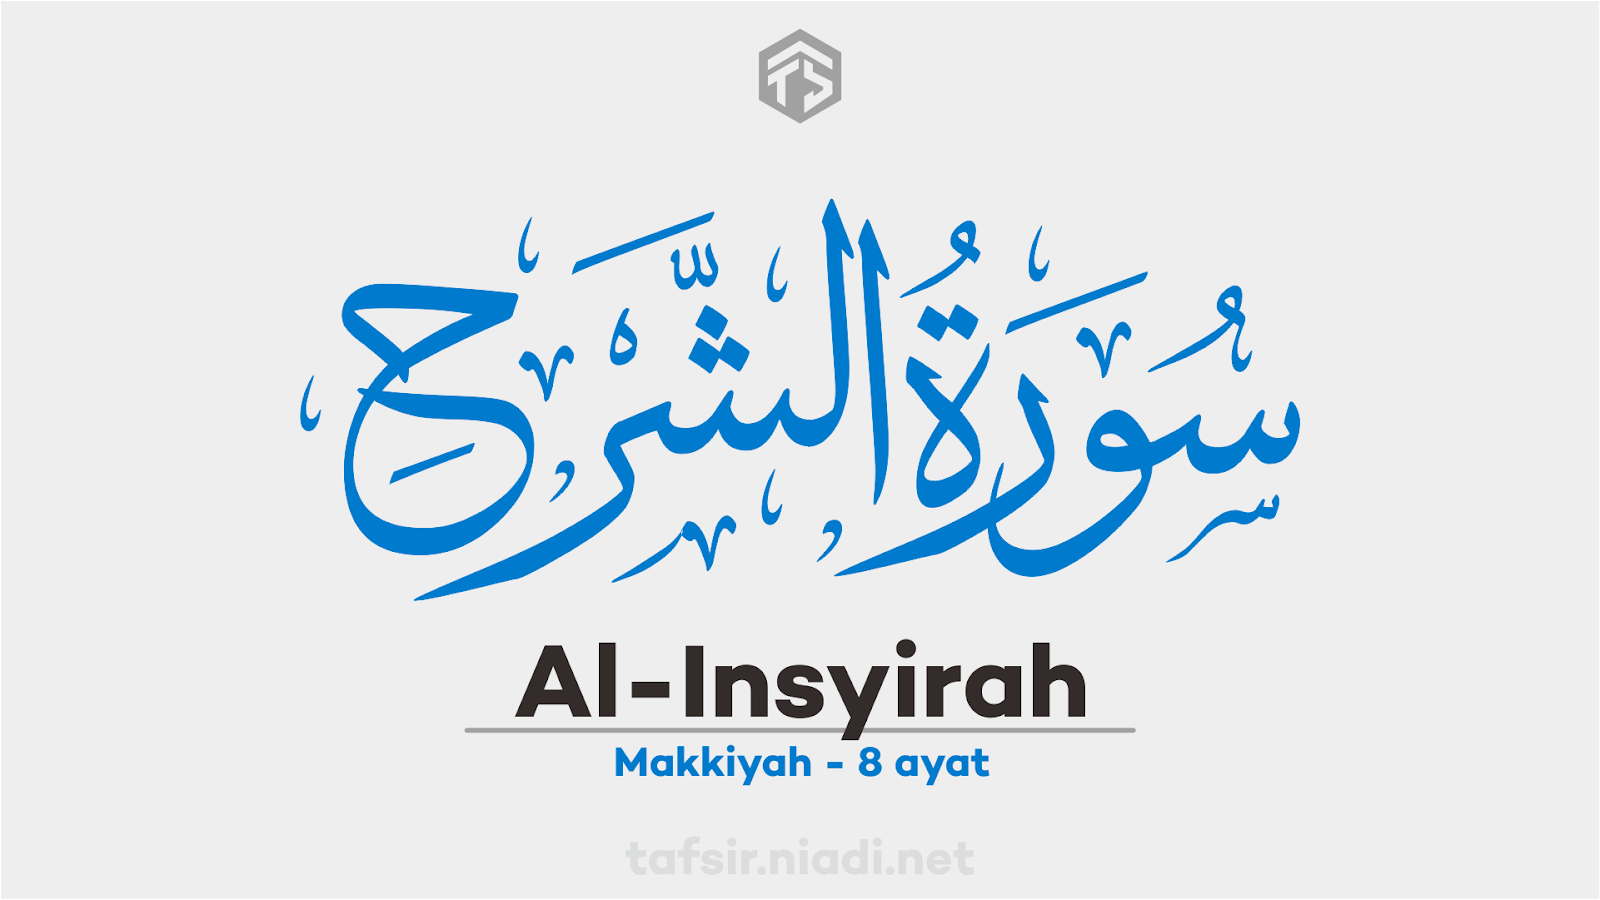 Tafsir Alquran Surah Al-Insyirah Ayat ke-2. Website Alquran online cepat, ringan, dan hemat kuota, lengkap dengan teks arab, latin, terjemah, dan tafsir bahasa Indonesia - tafsir.niadi.net